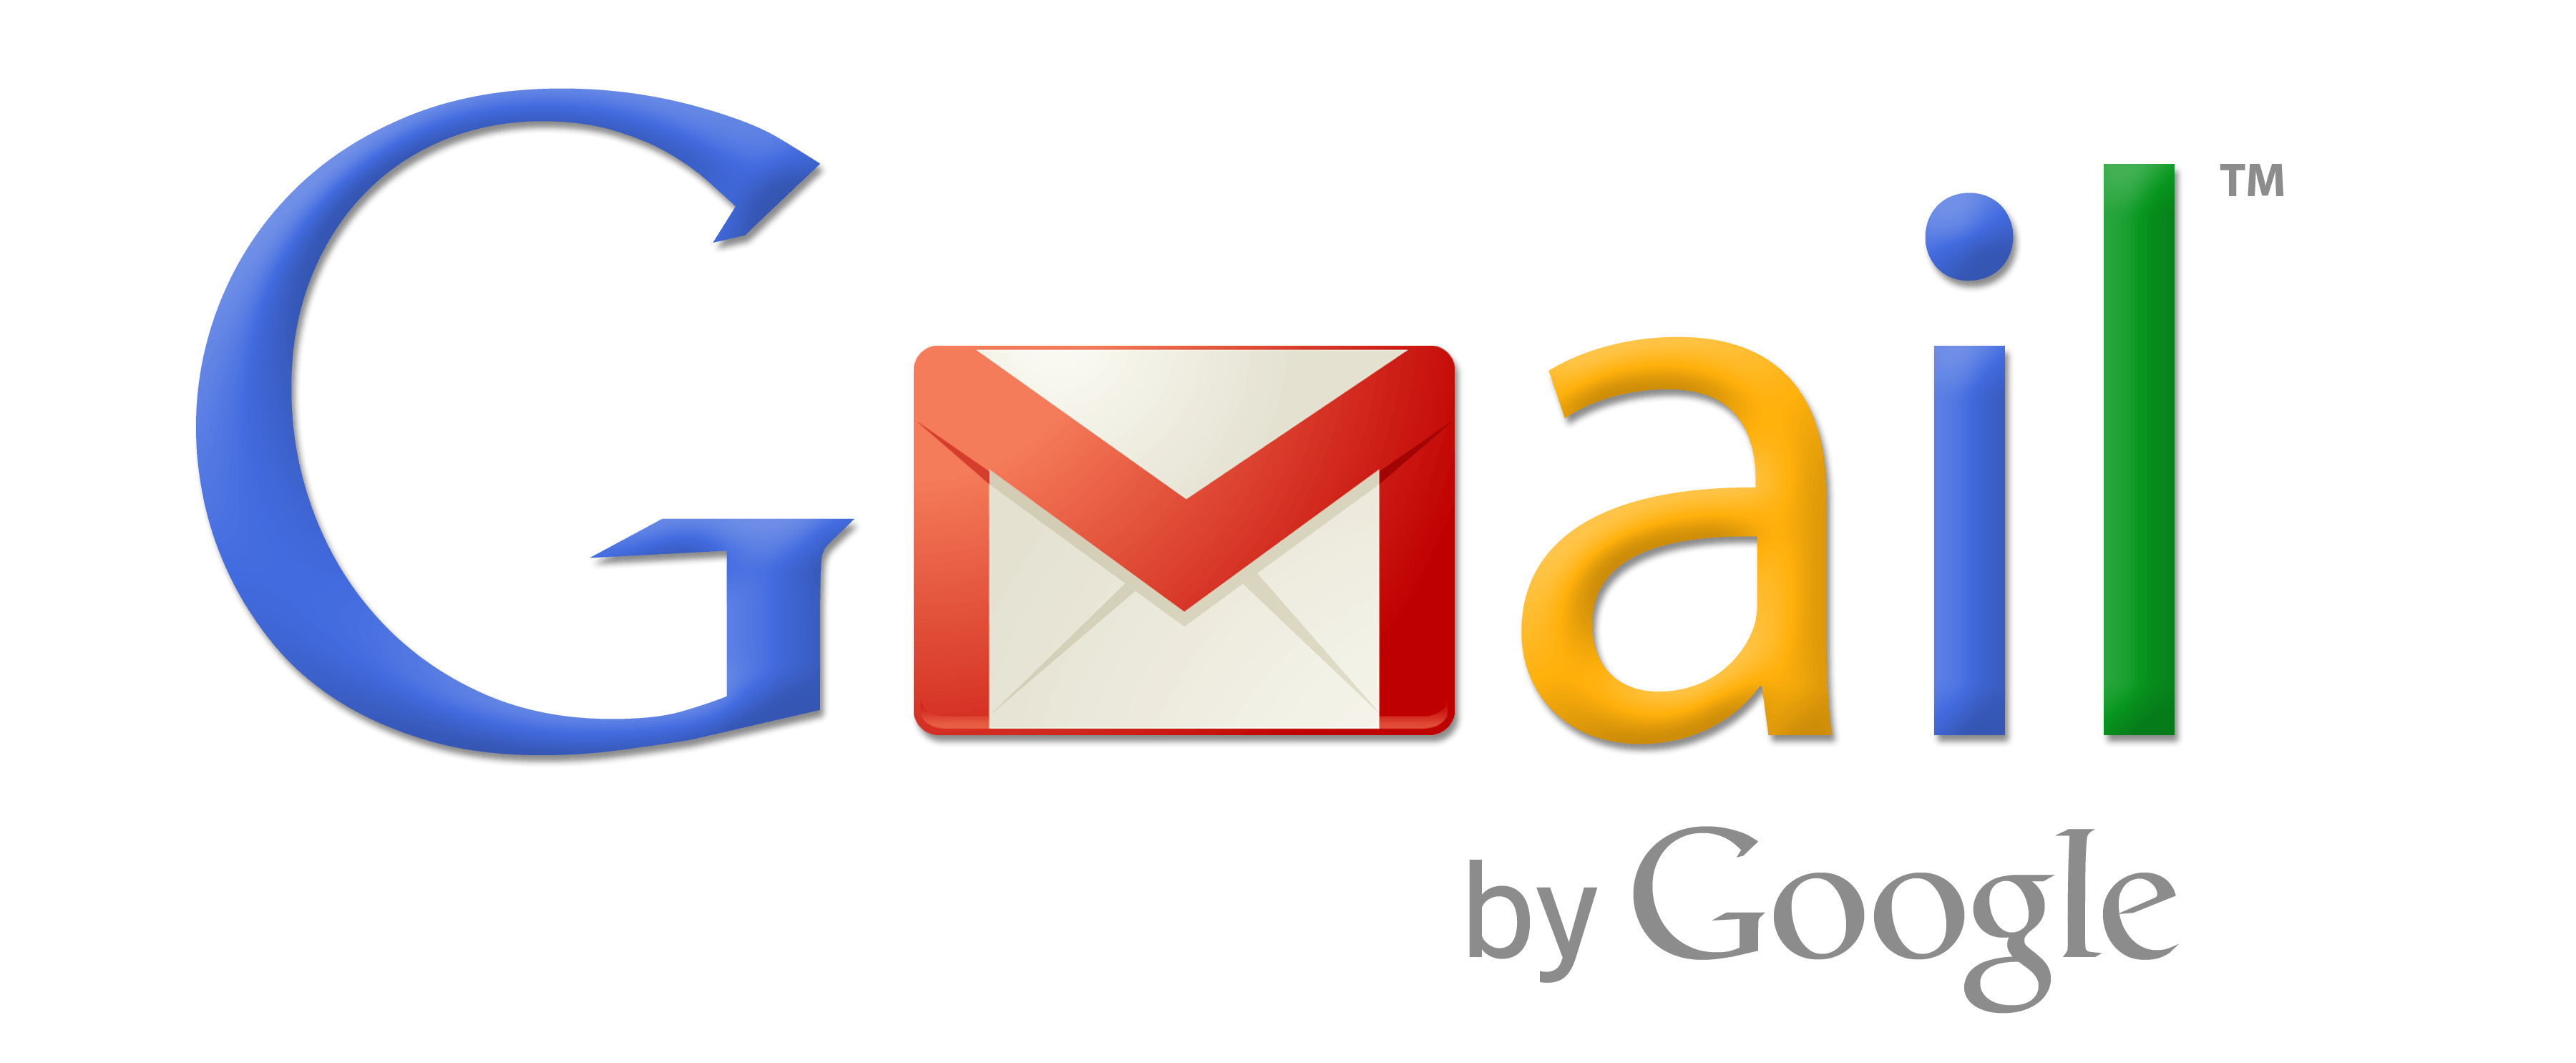 Gmail 24. Gamil. Gmail почта. Gmail logo.